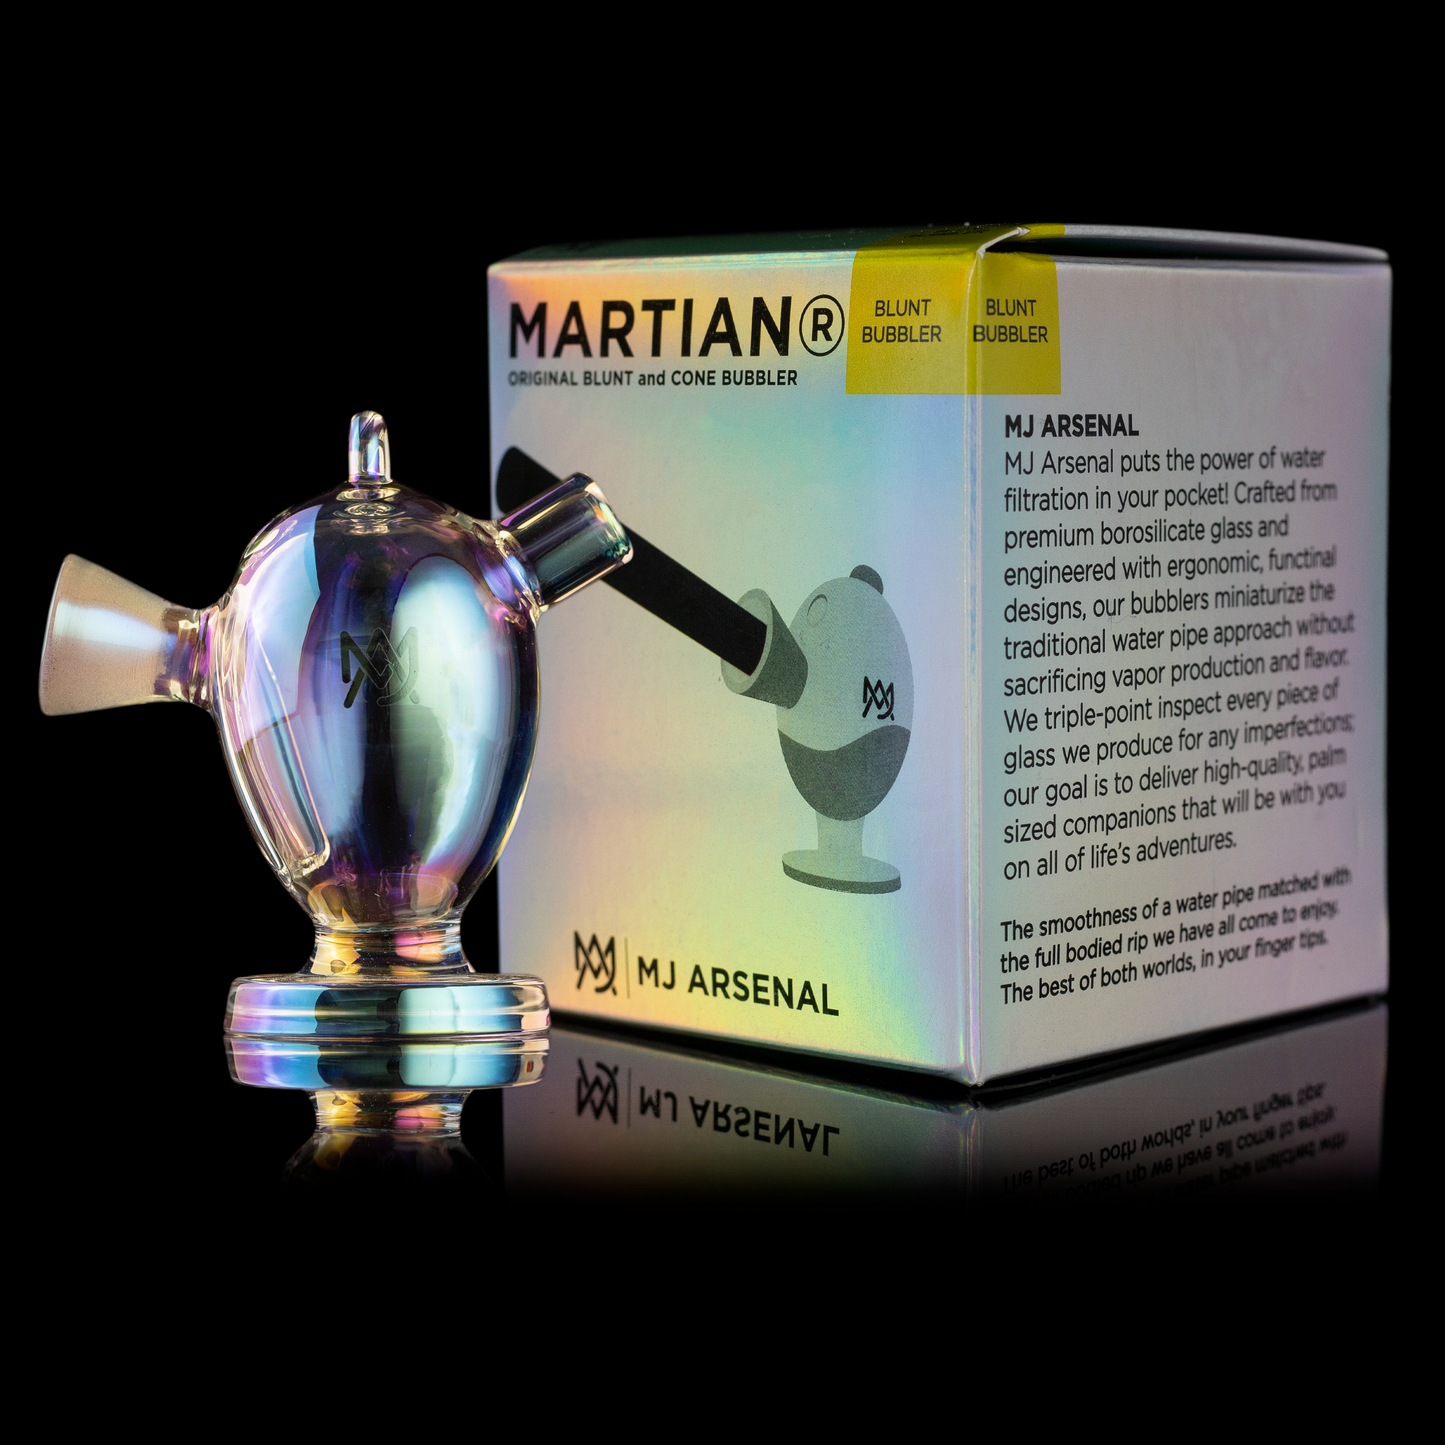 The Martian® Iridescent Blunt Bubbler™ - LE